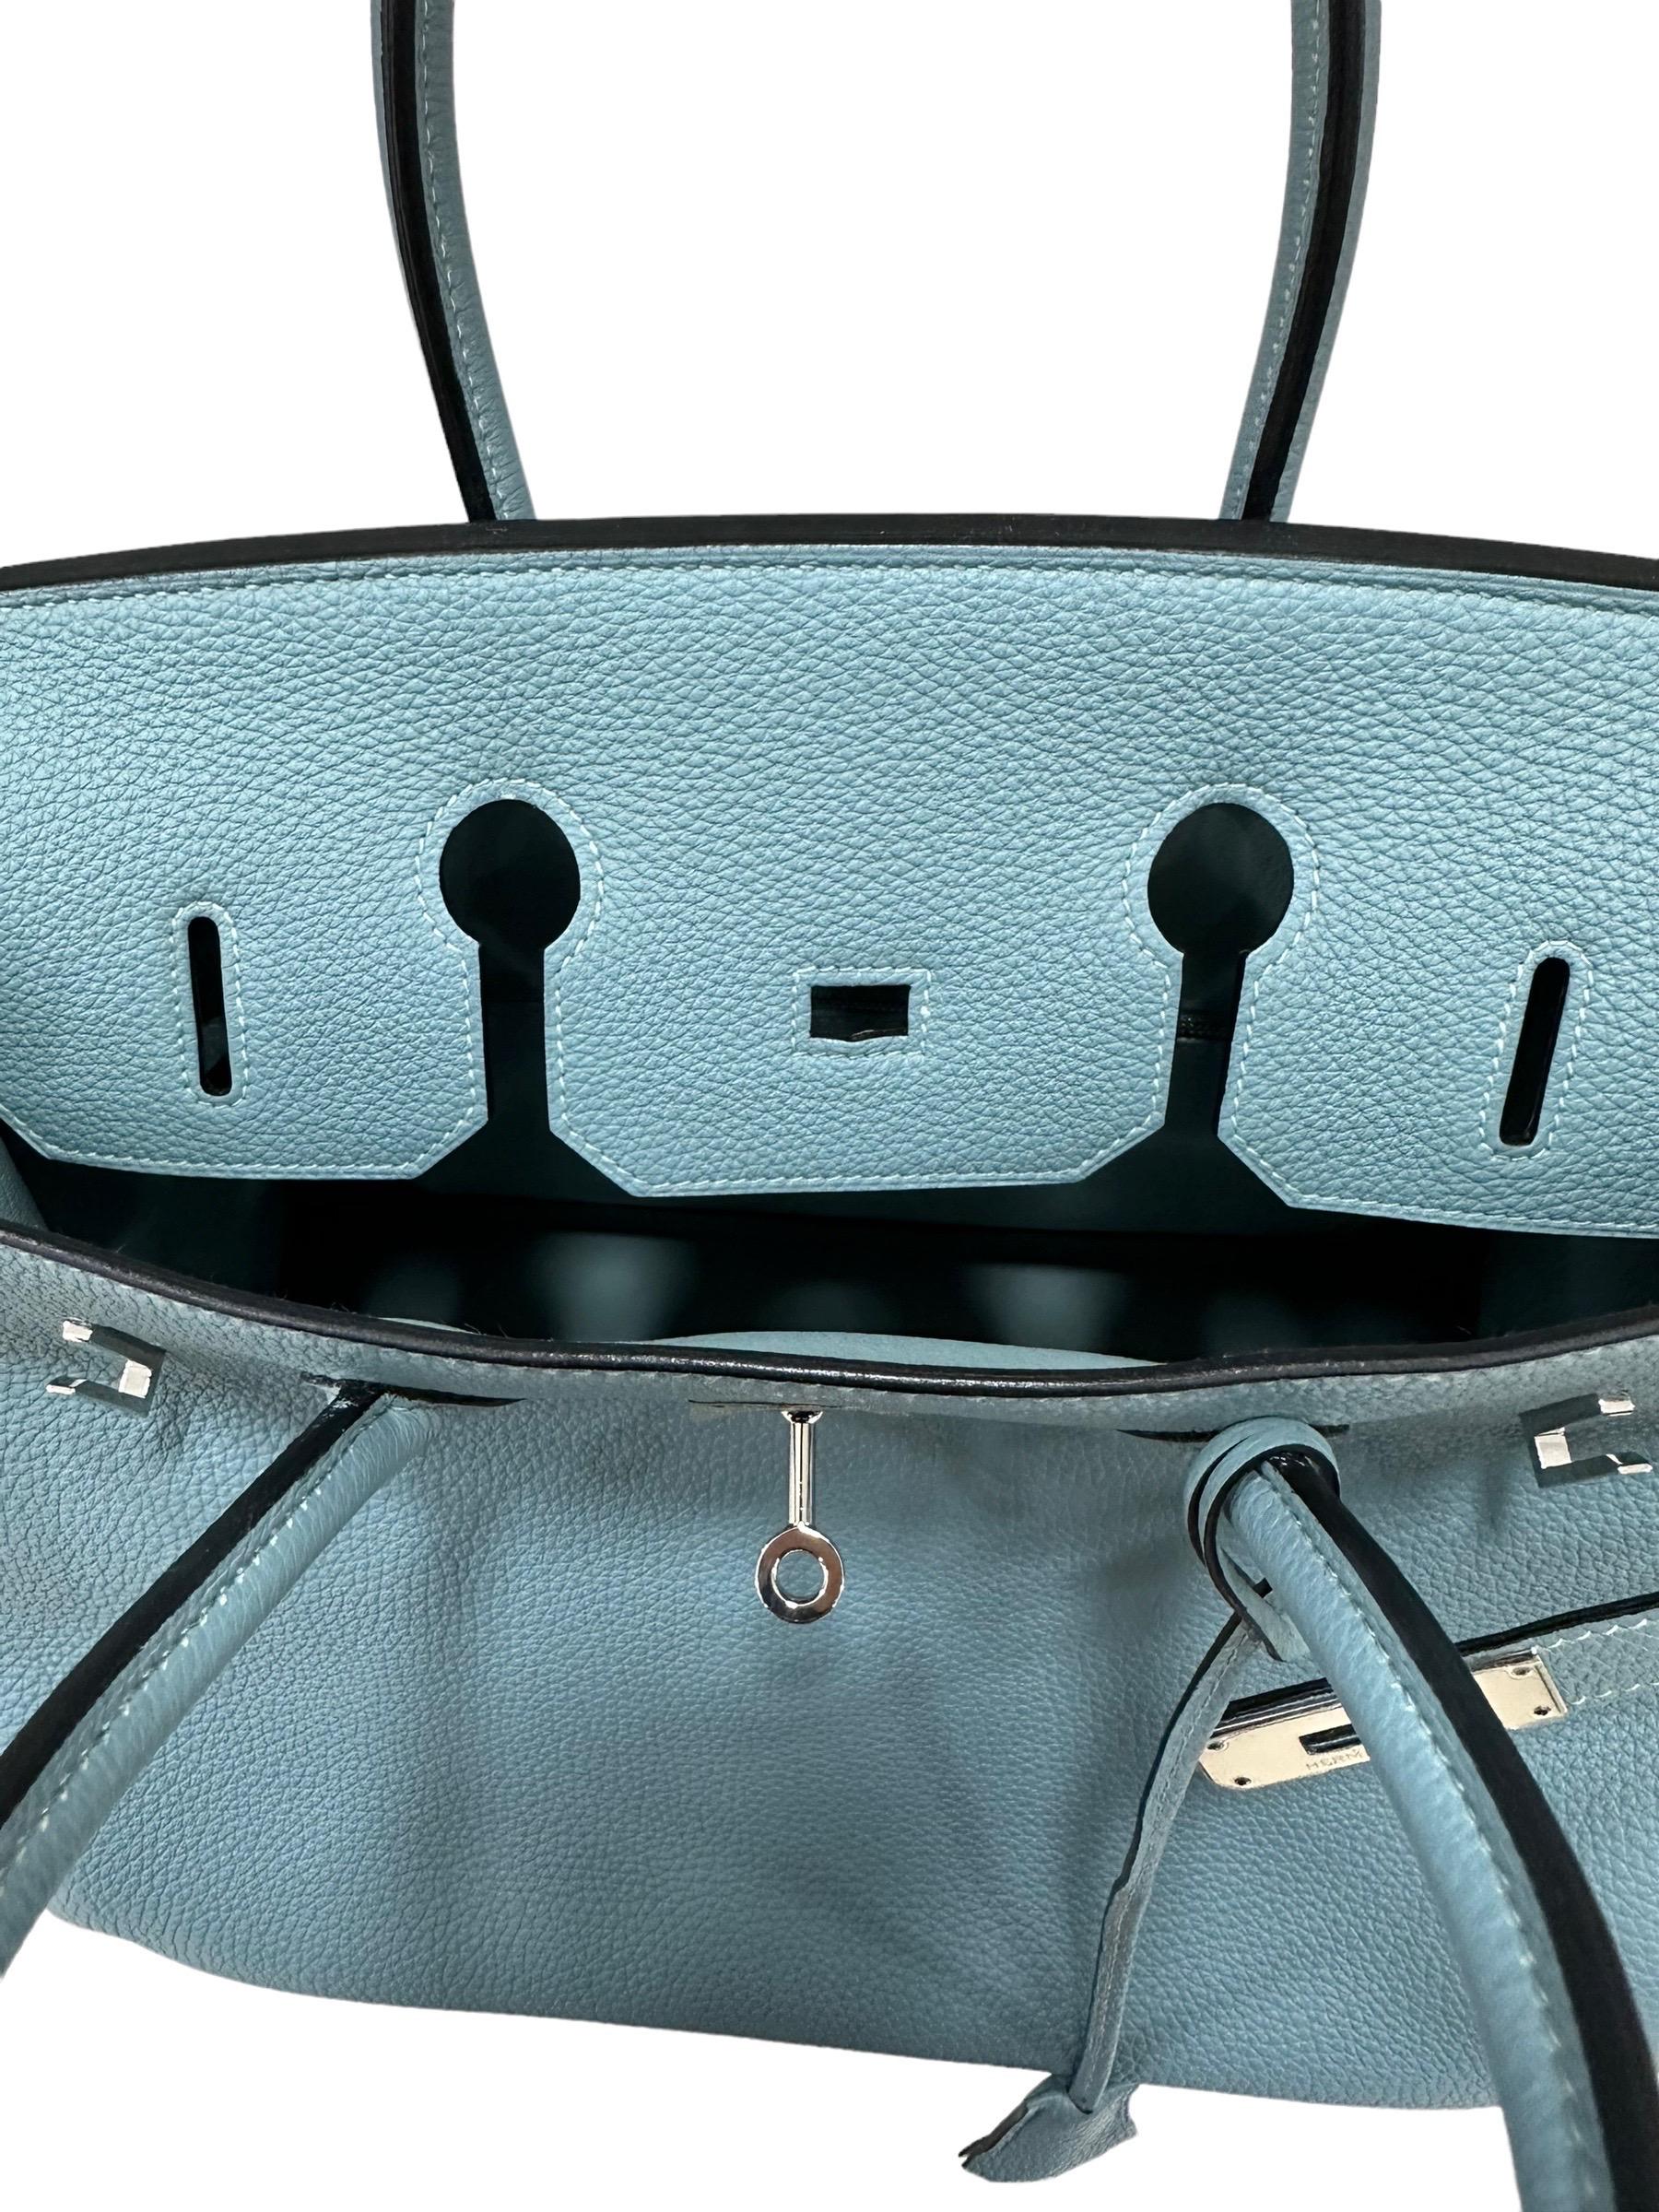 2009 Hermès Birkin 35 Togo Leather Ciel Top Handle Bag In Excellent Condition For Sale In Torre Del Greco, IT